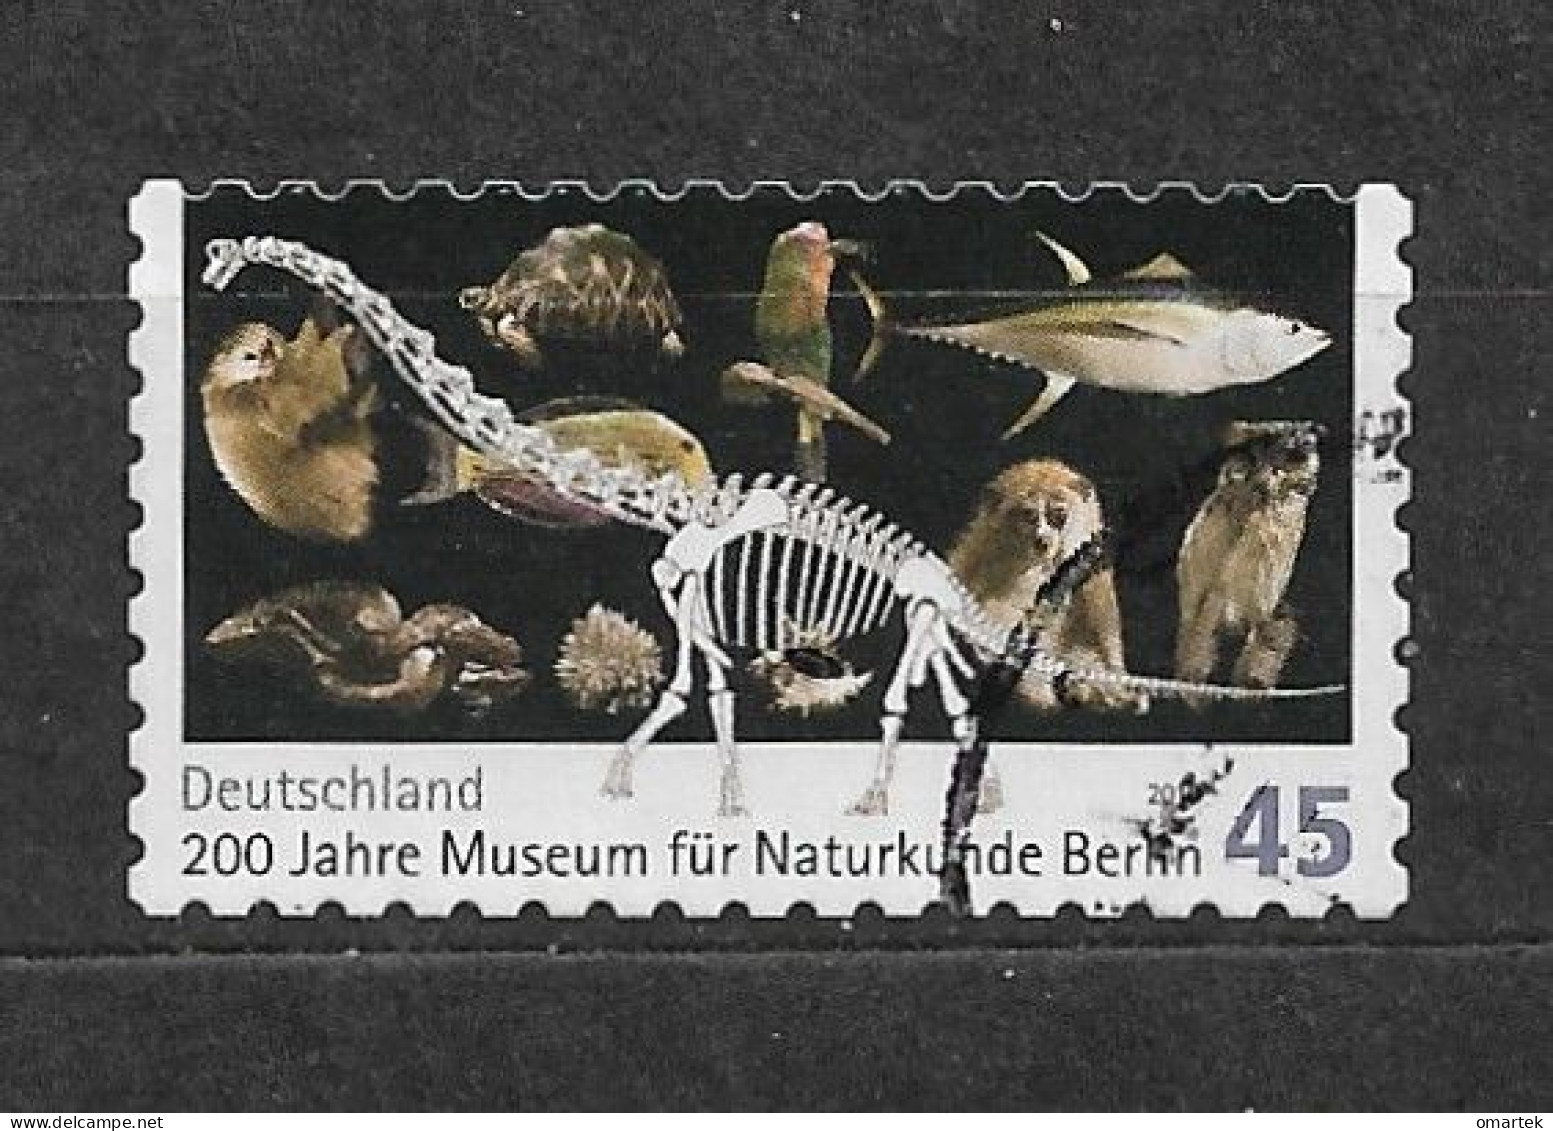 Deutschland Germany BRD 2010 ⊙ Mi 2780 Natural History Museum, Berlin. C1 - Used Stamps